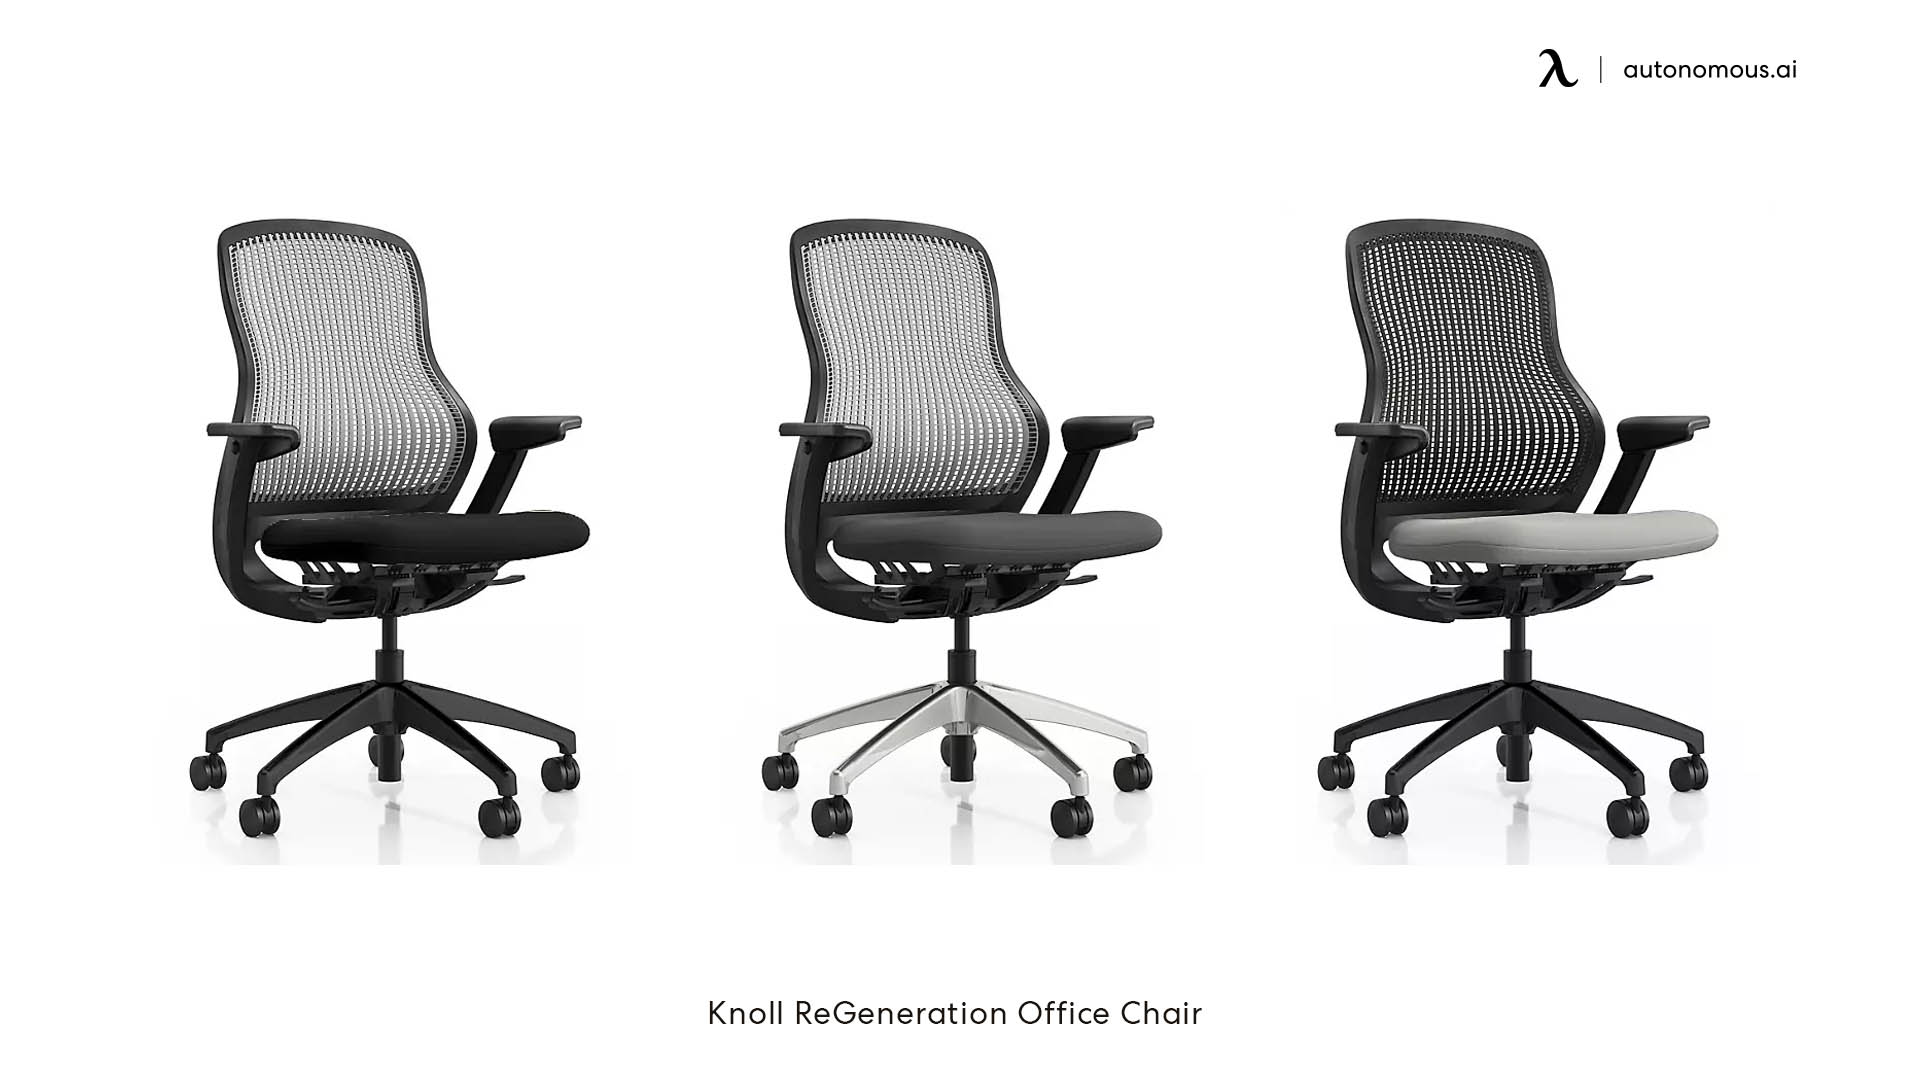 Knoll ReGeneration Office Chair